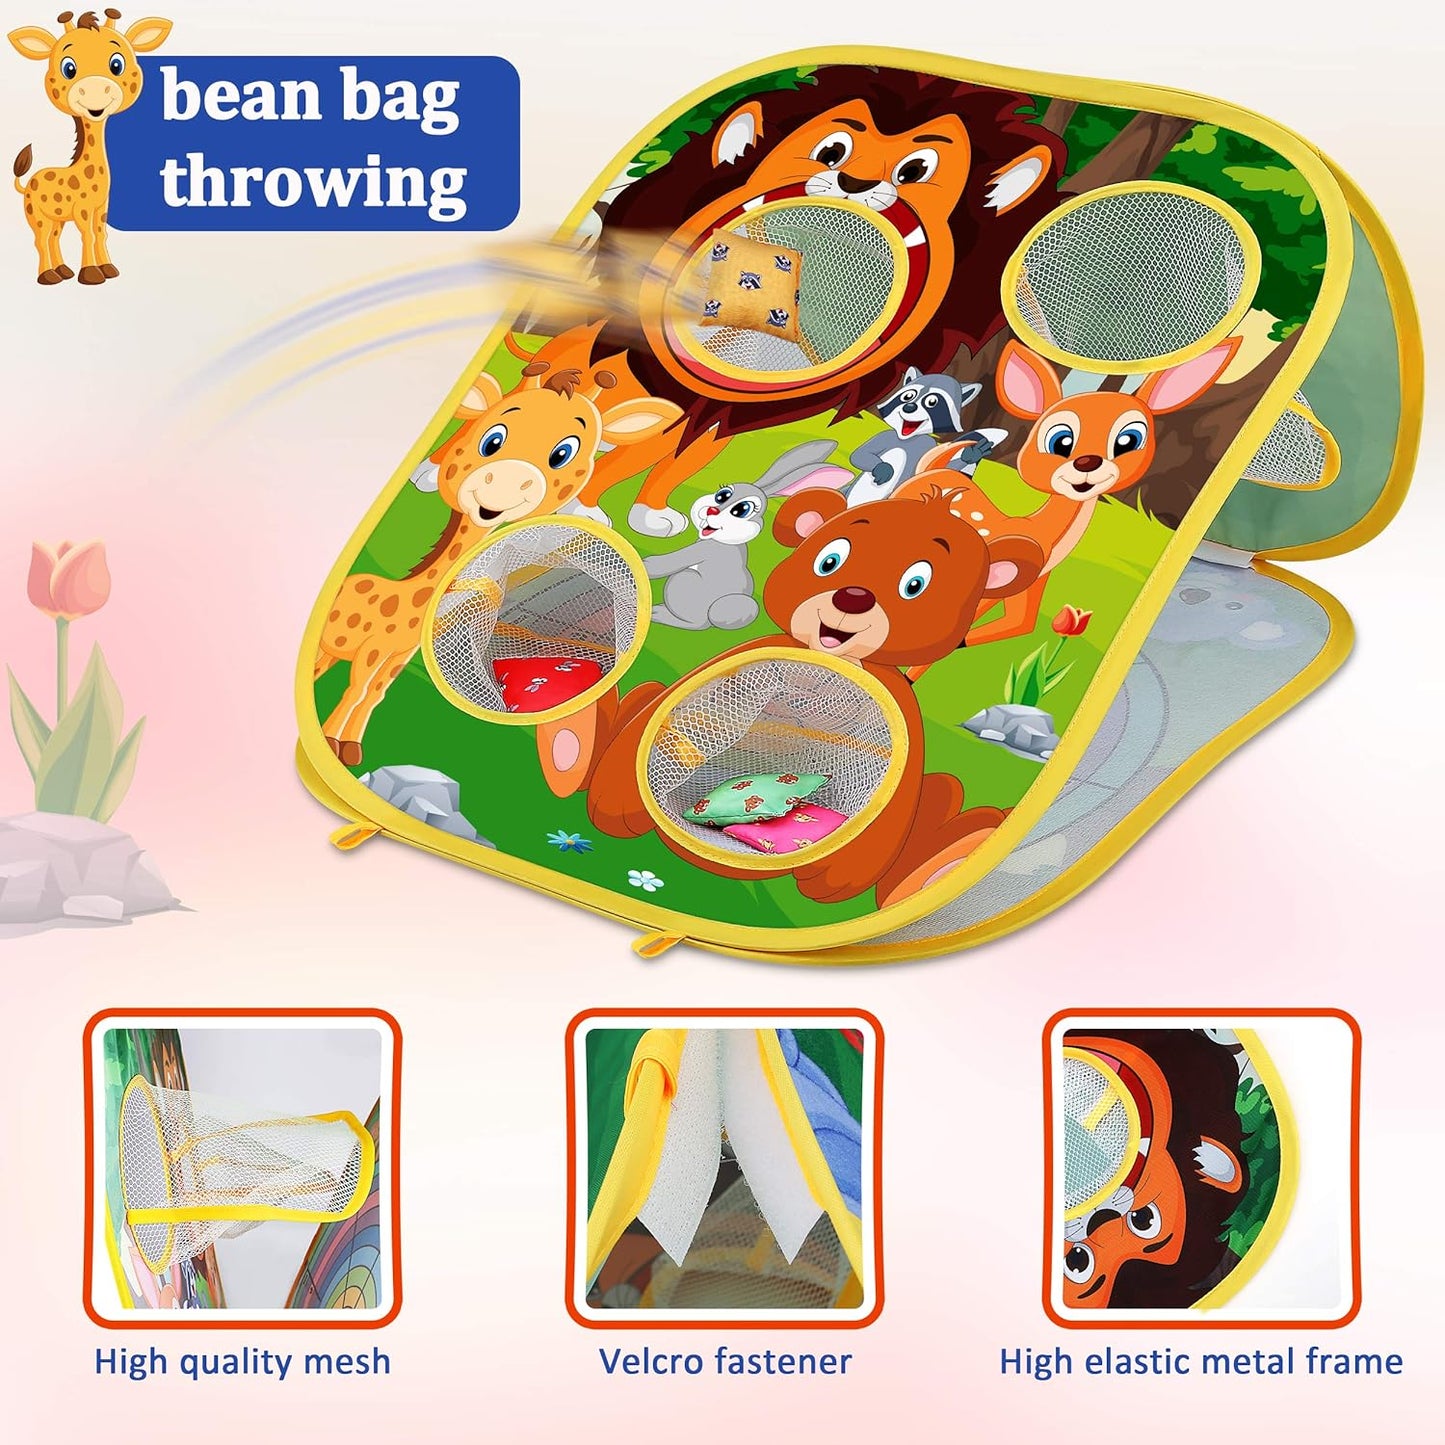 Bean Bag Animal Toss Game